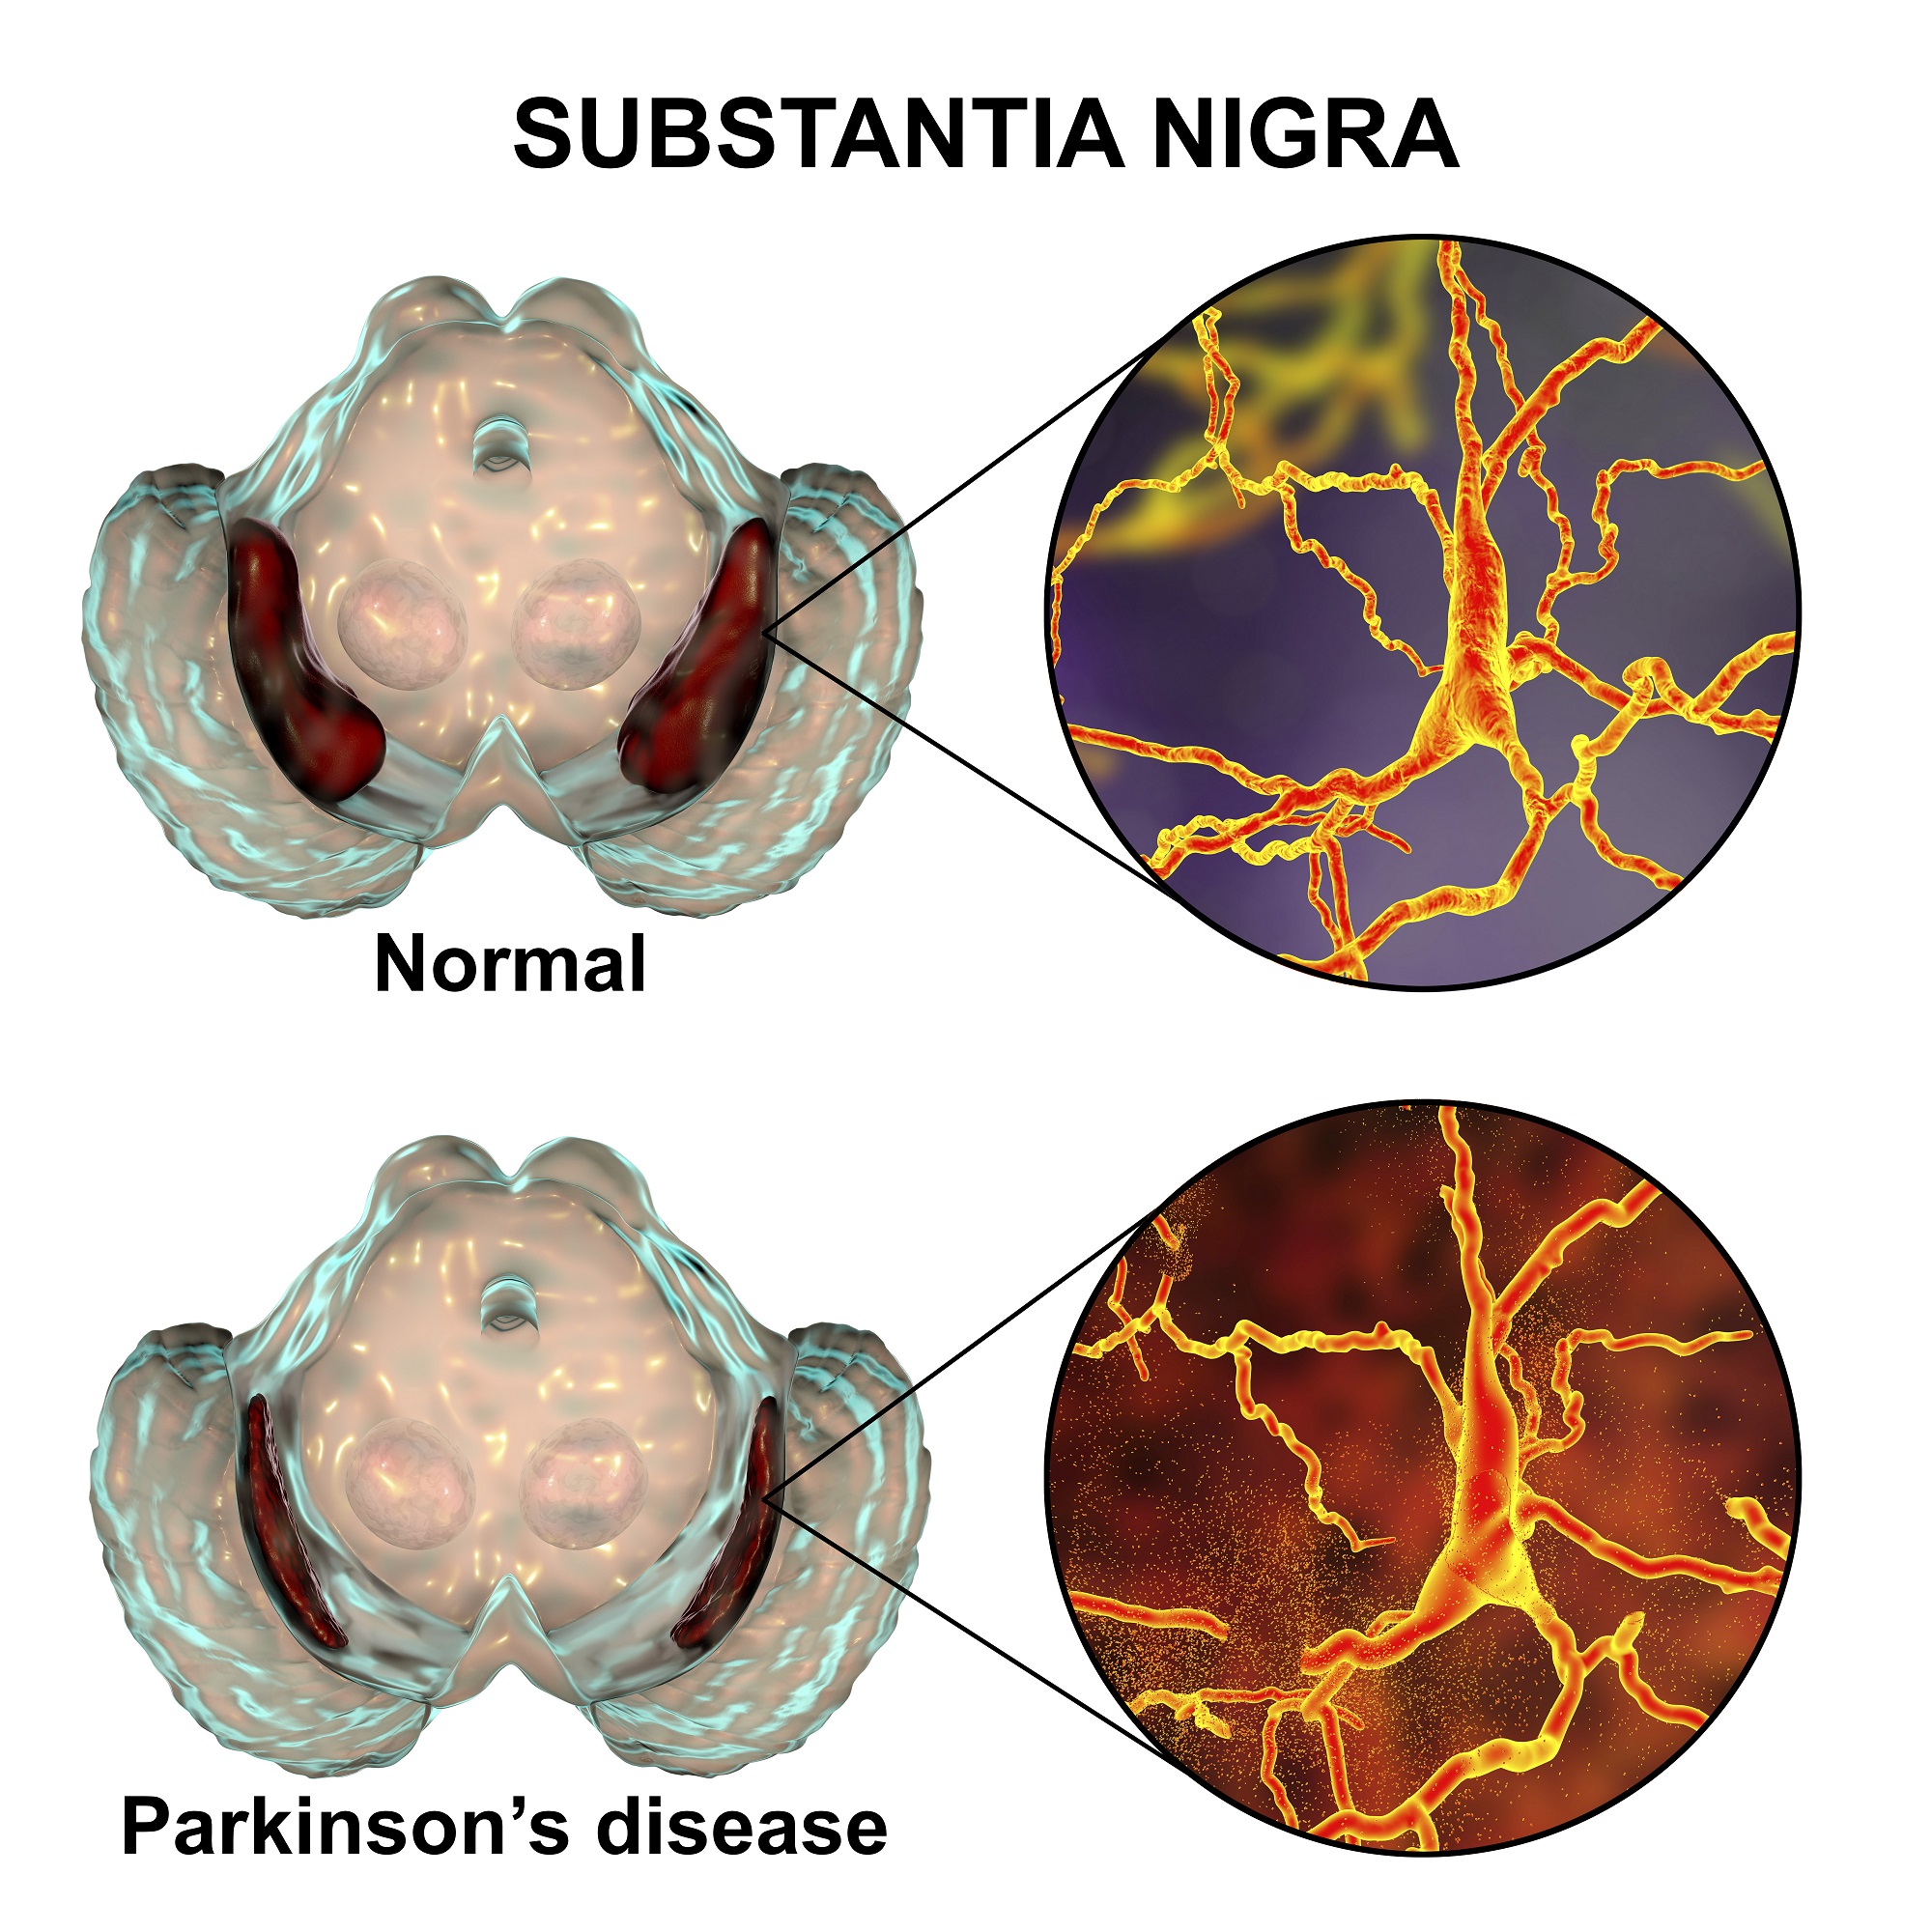 Ooforectomia bilateral e aumento do risco da doença de Parkinson